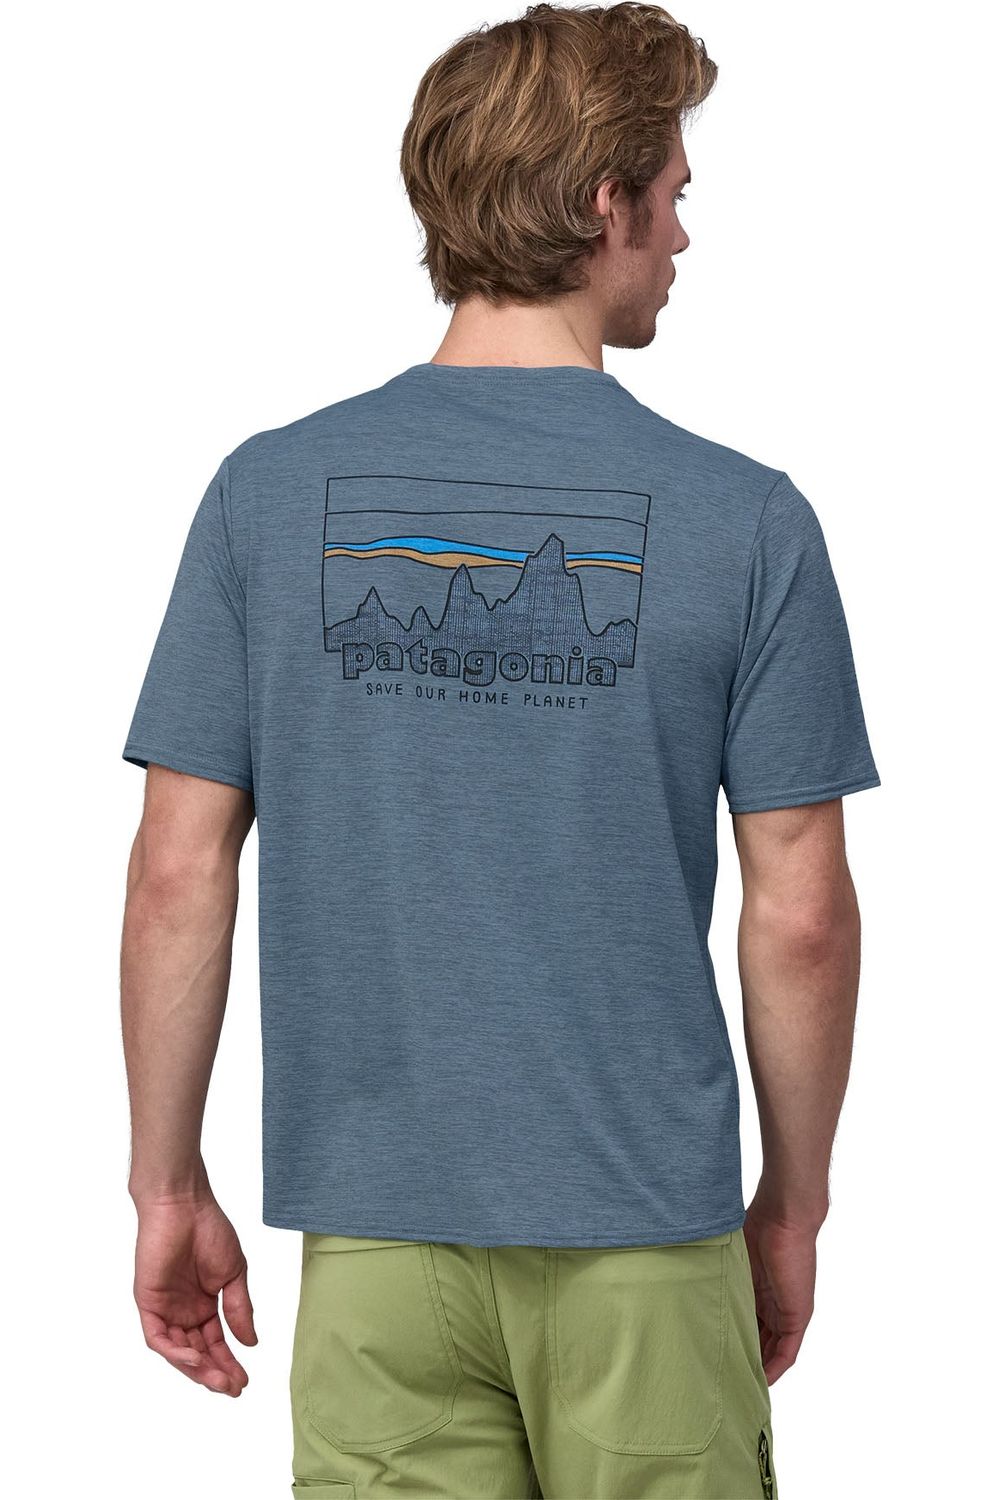 Patagonia Men's Cap Cool Daily Graphic Shirt '73 Skyline: Utility Blue X-Dye